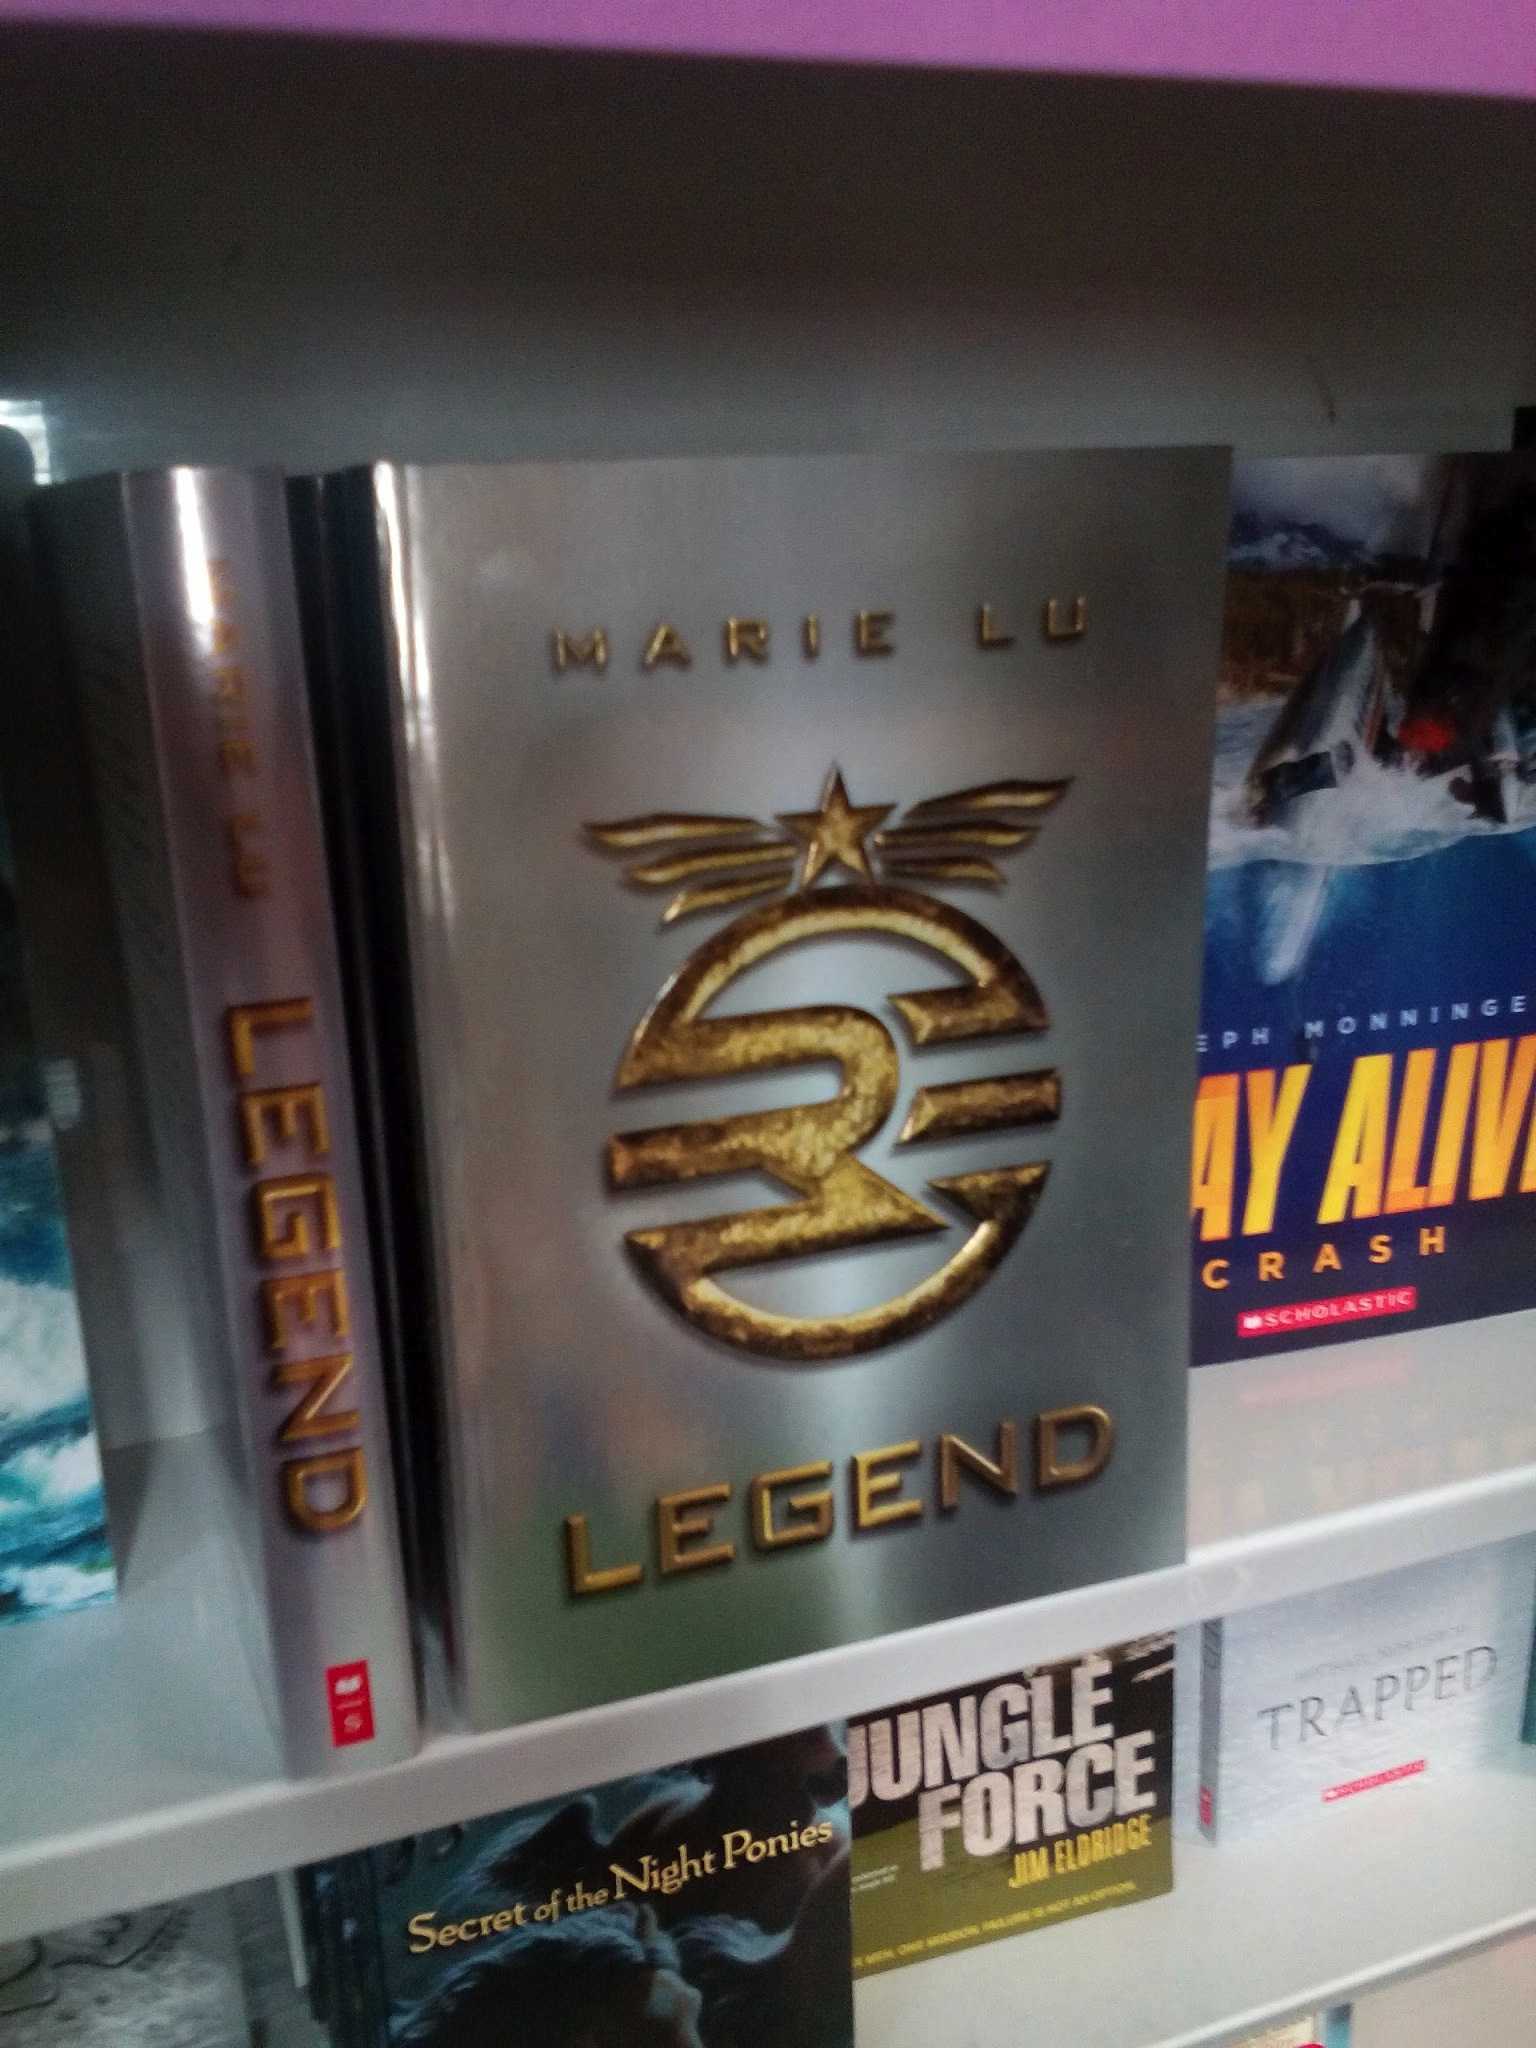 legend series book